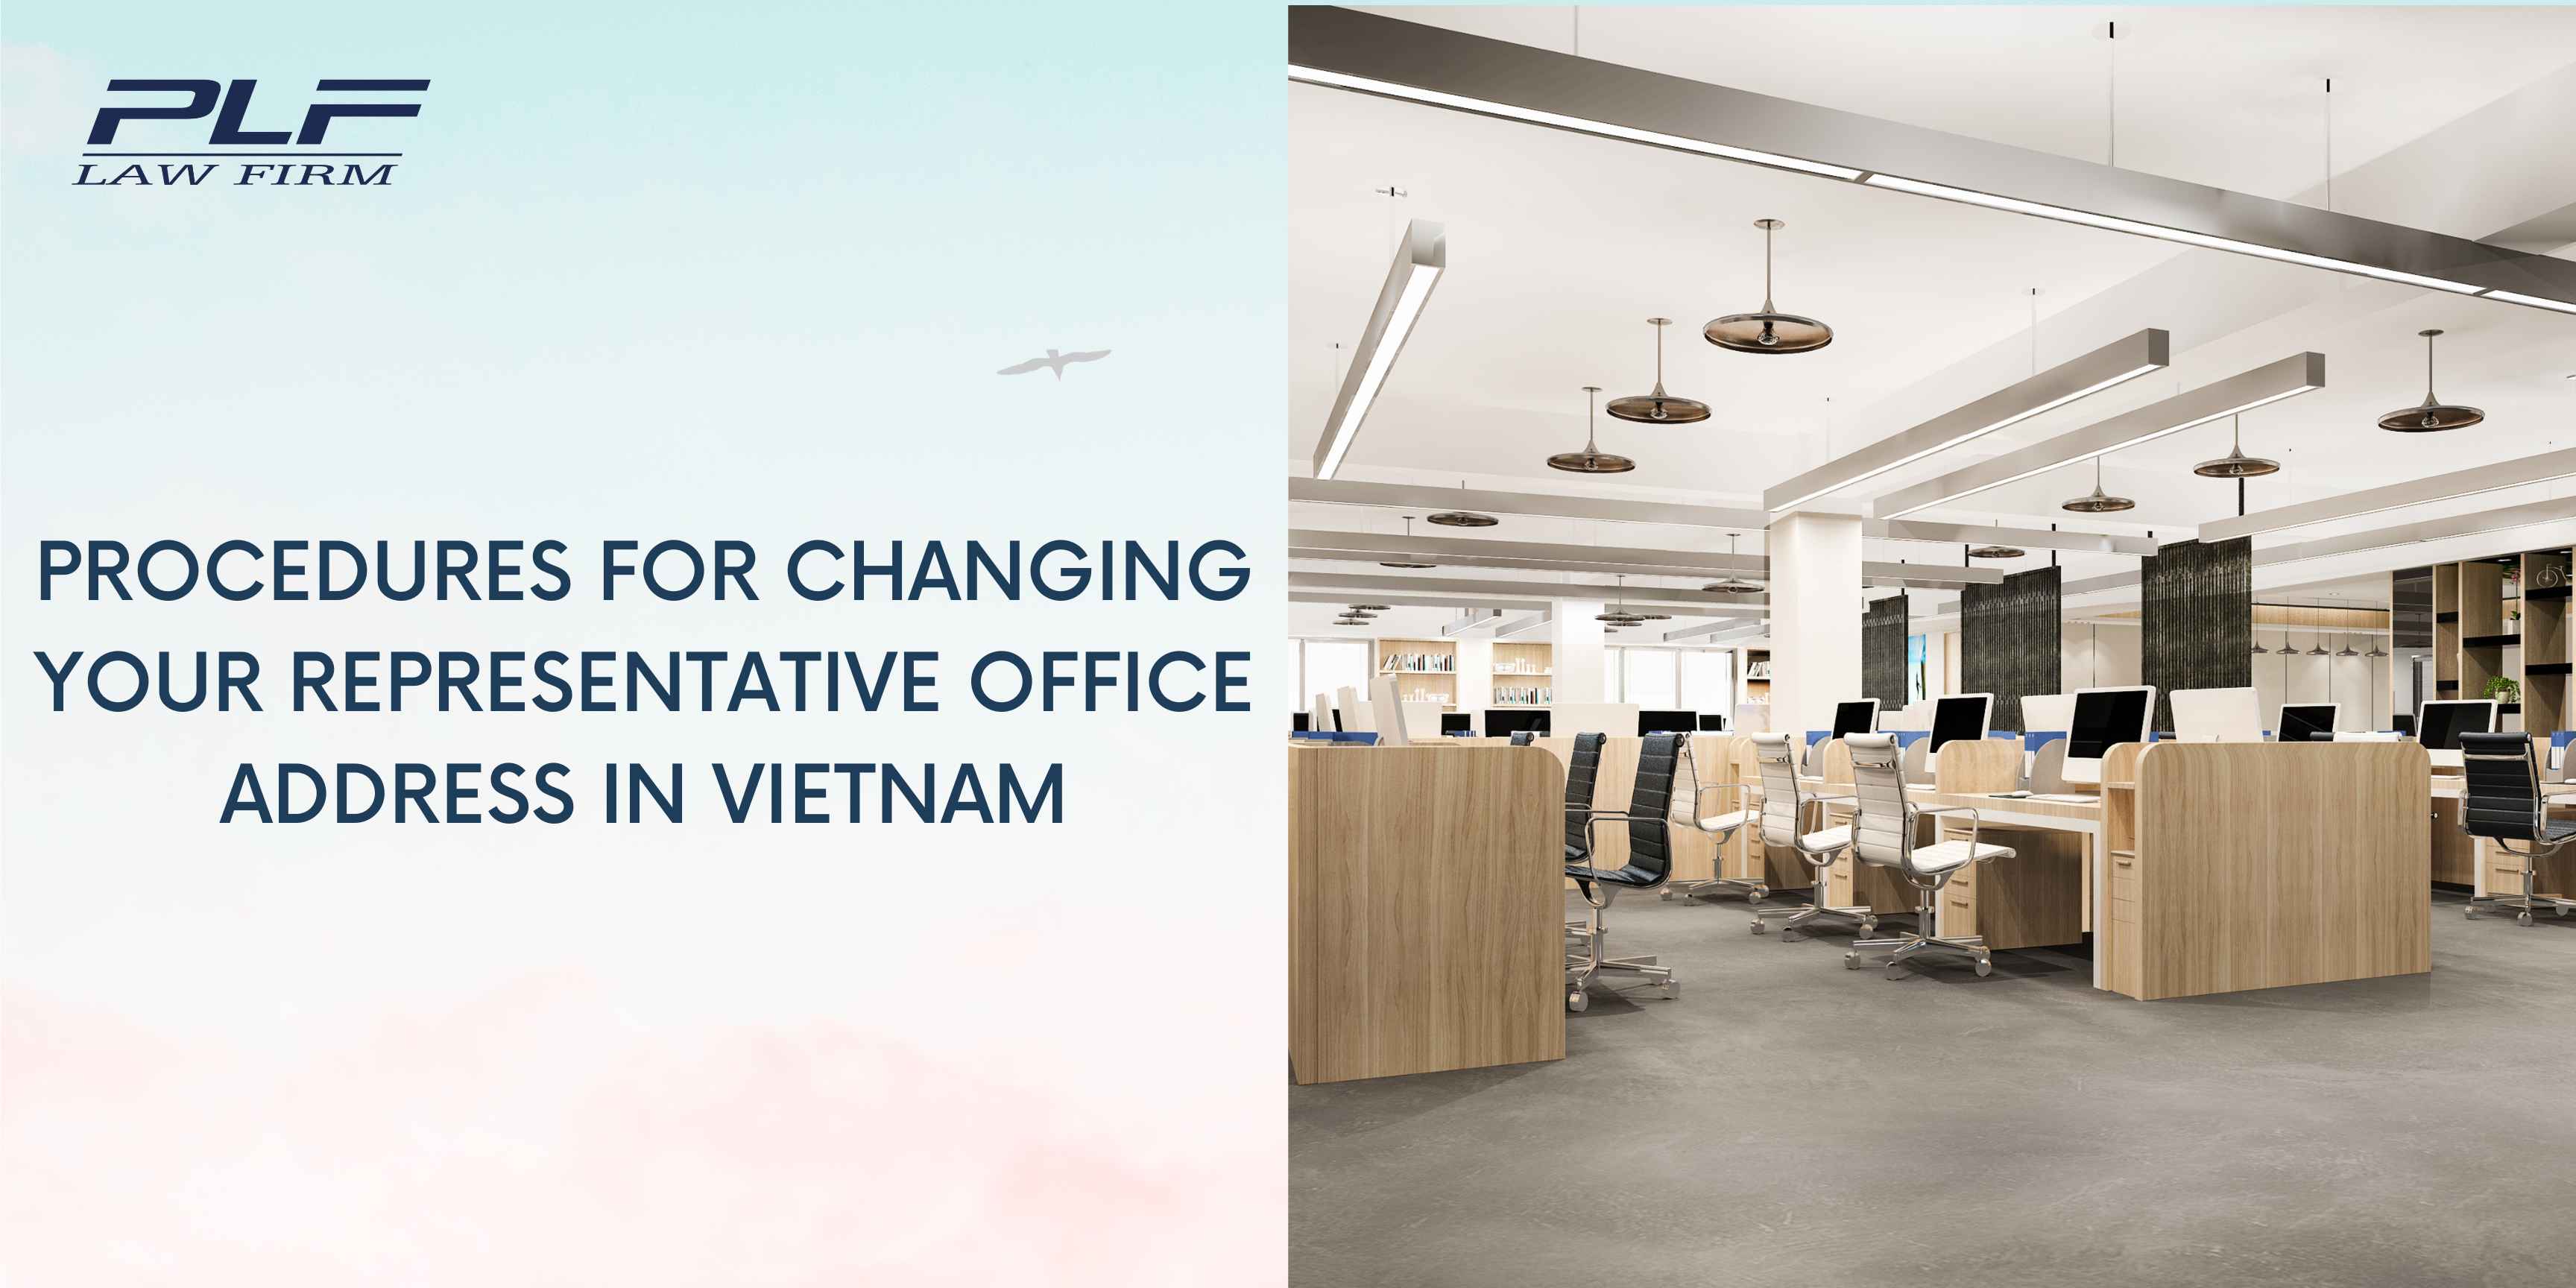 Plf Procedures For Changing Your Representative Office Address In Vietnam